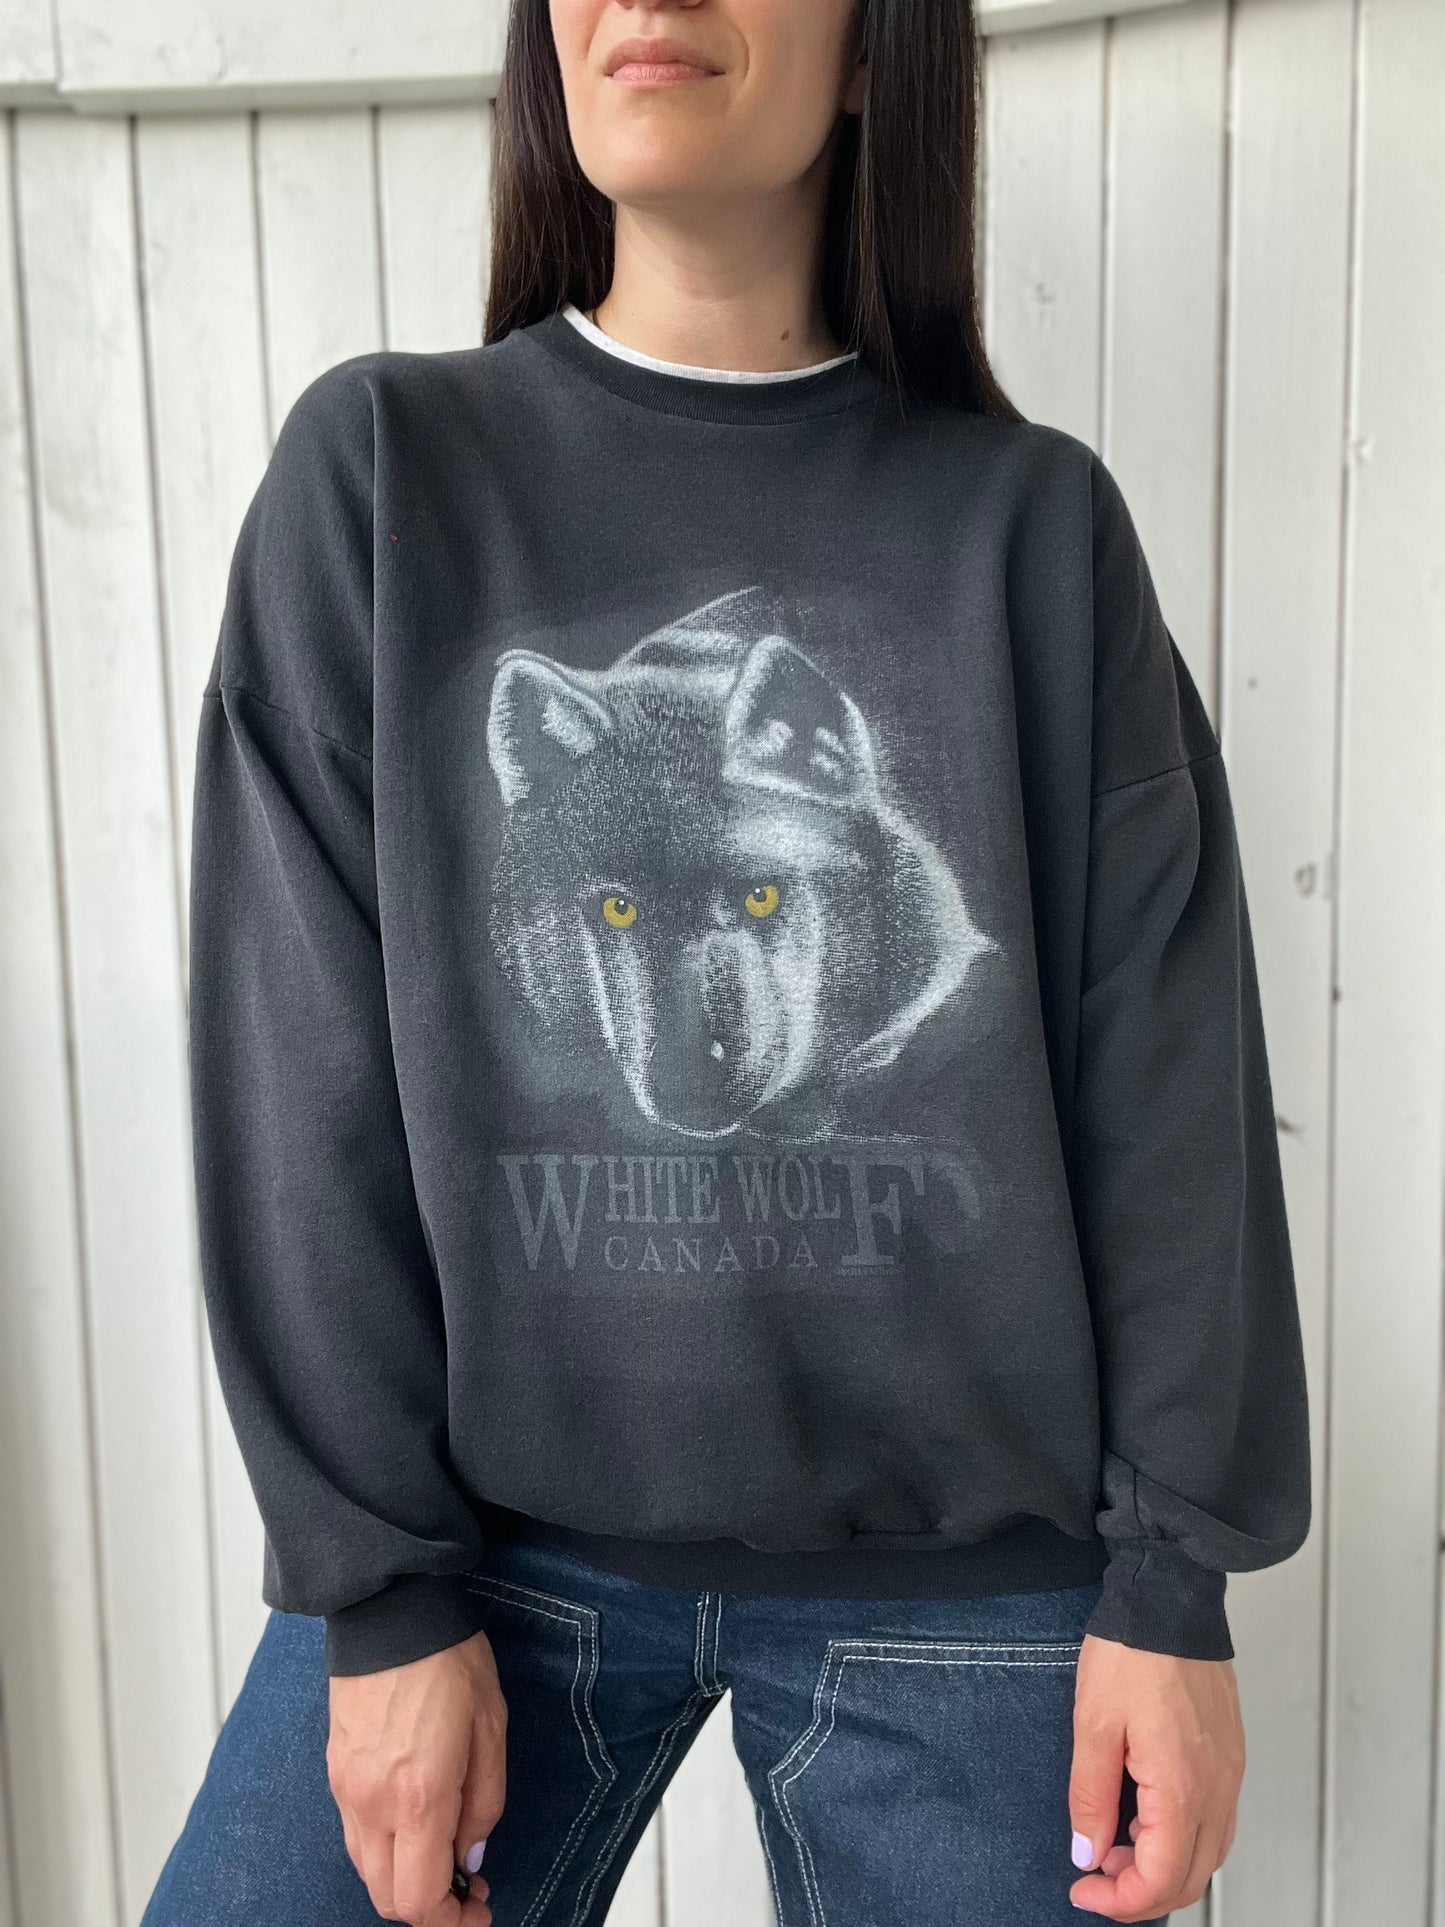 White Wolf Crewneck Sweater - Size XL